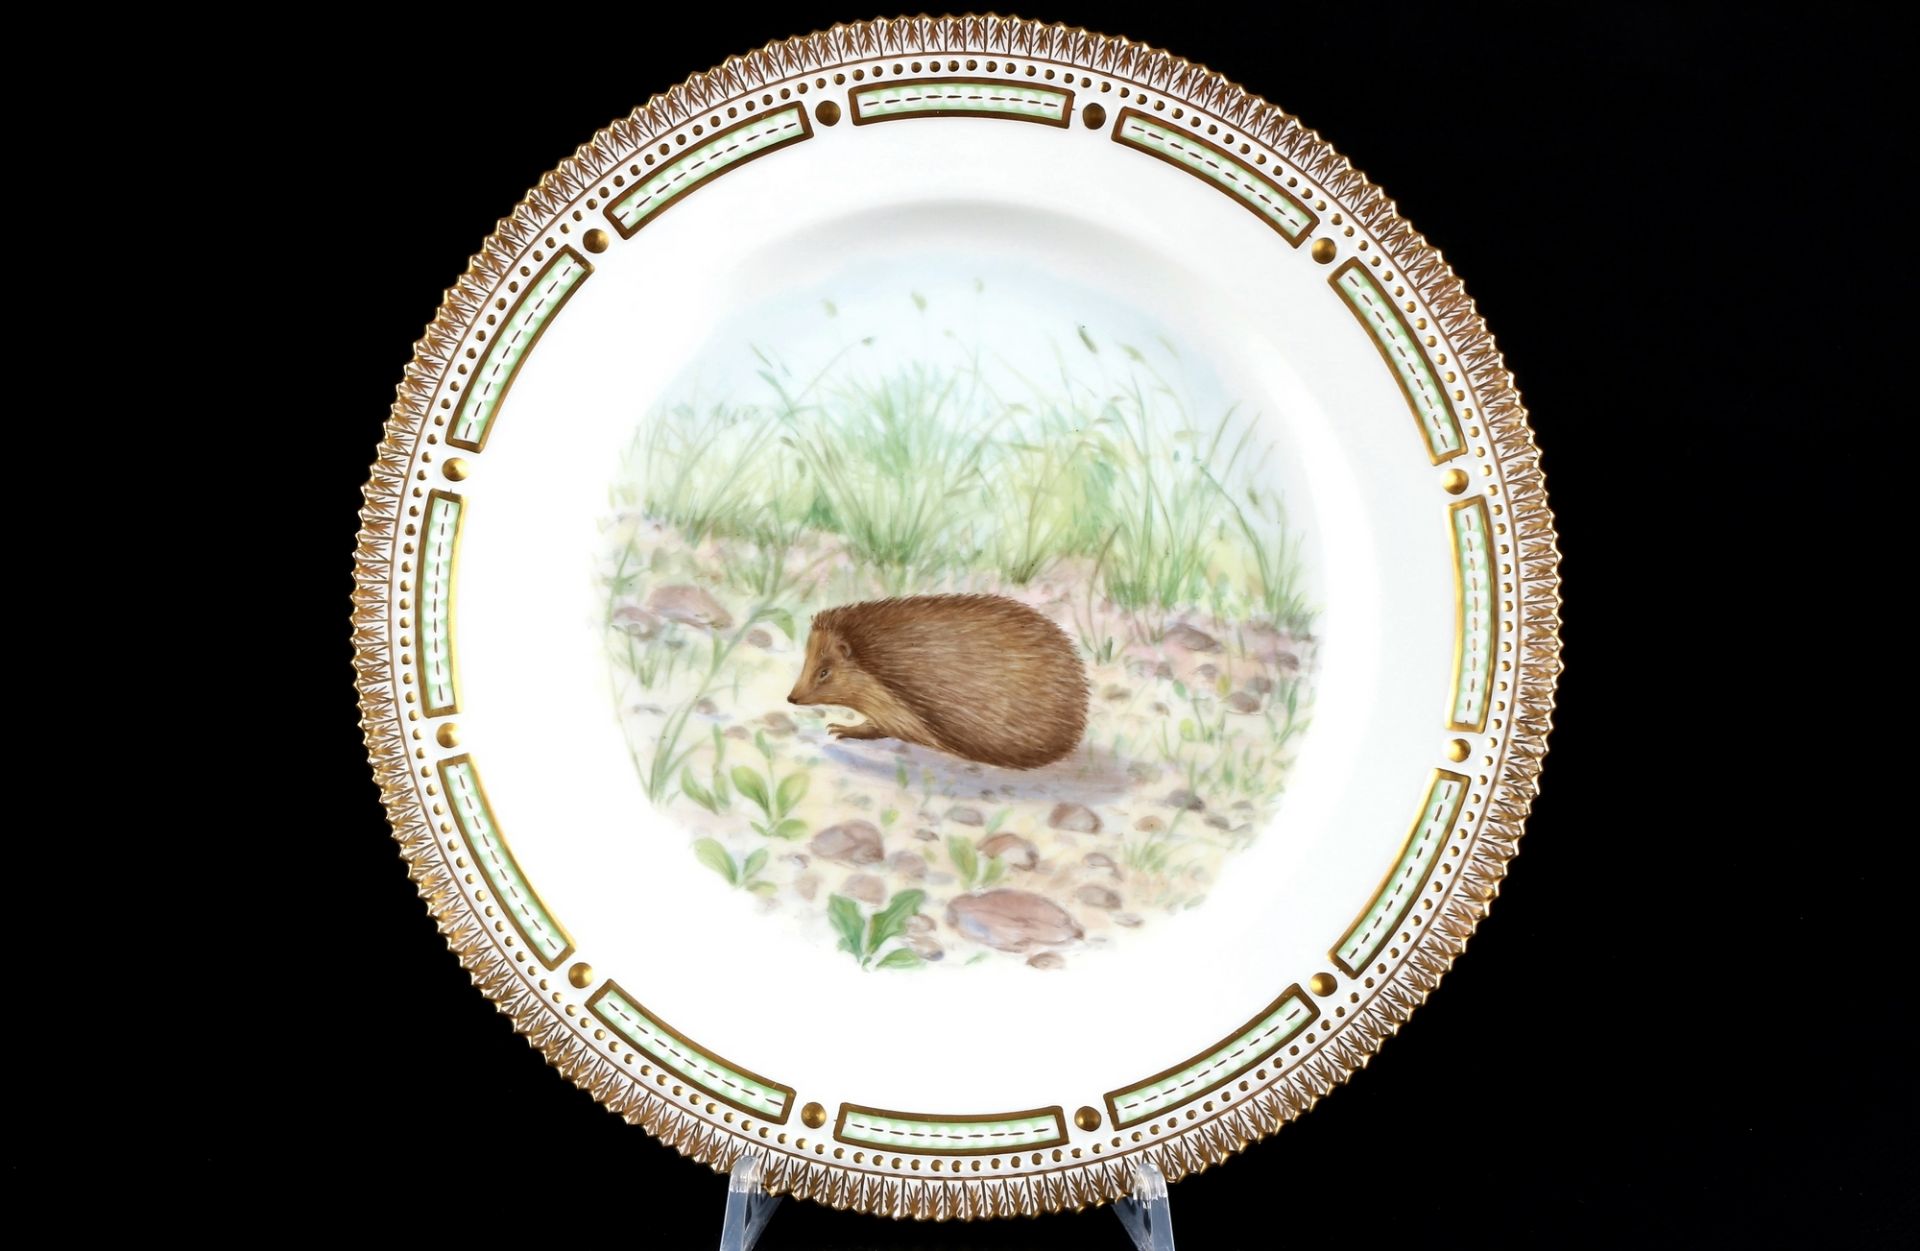 Royal Copenhagen Fauna Danica Speiseteller 3549, dining plate 1st choice,